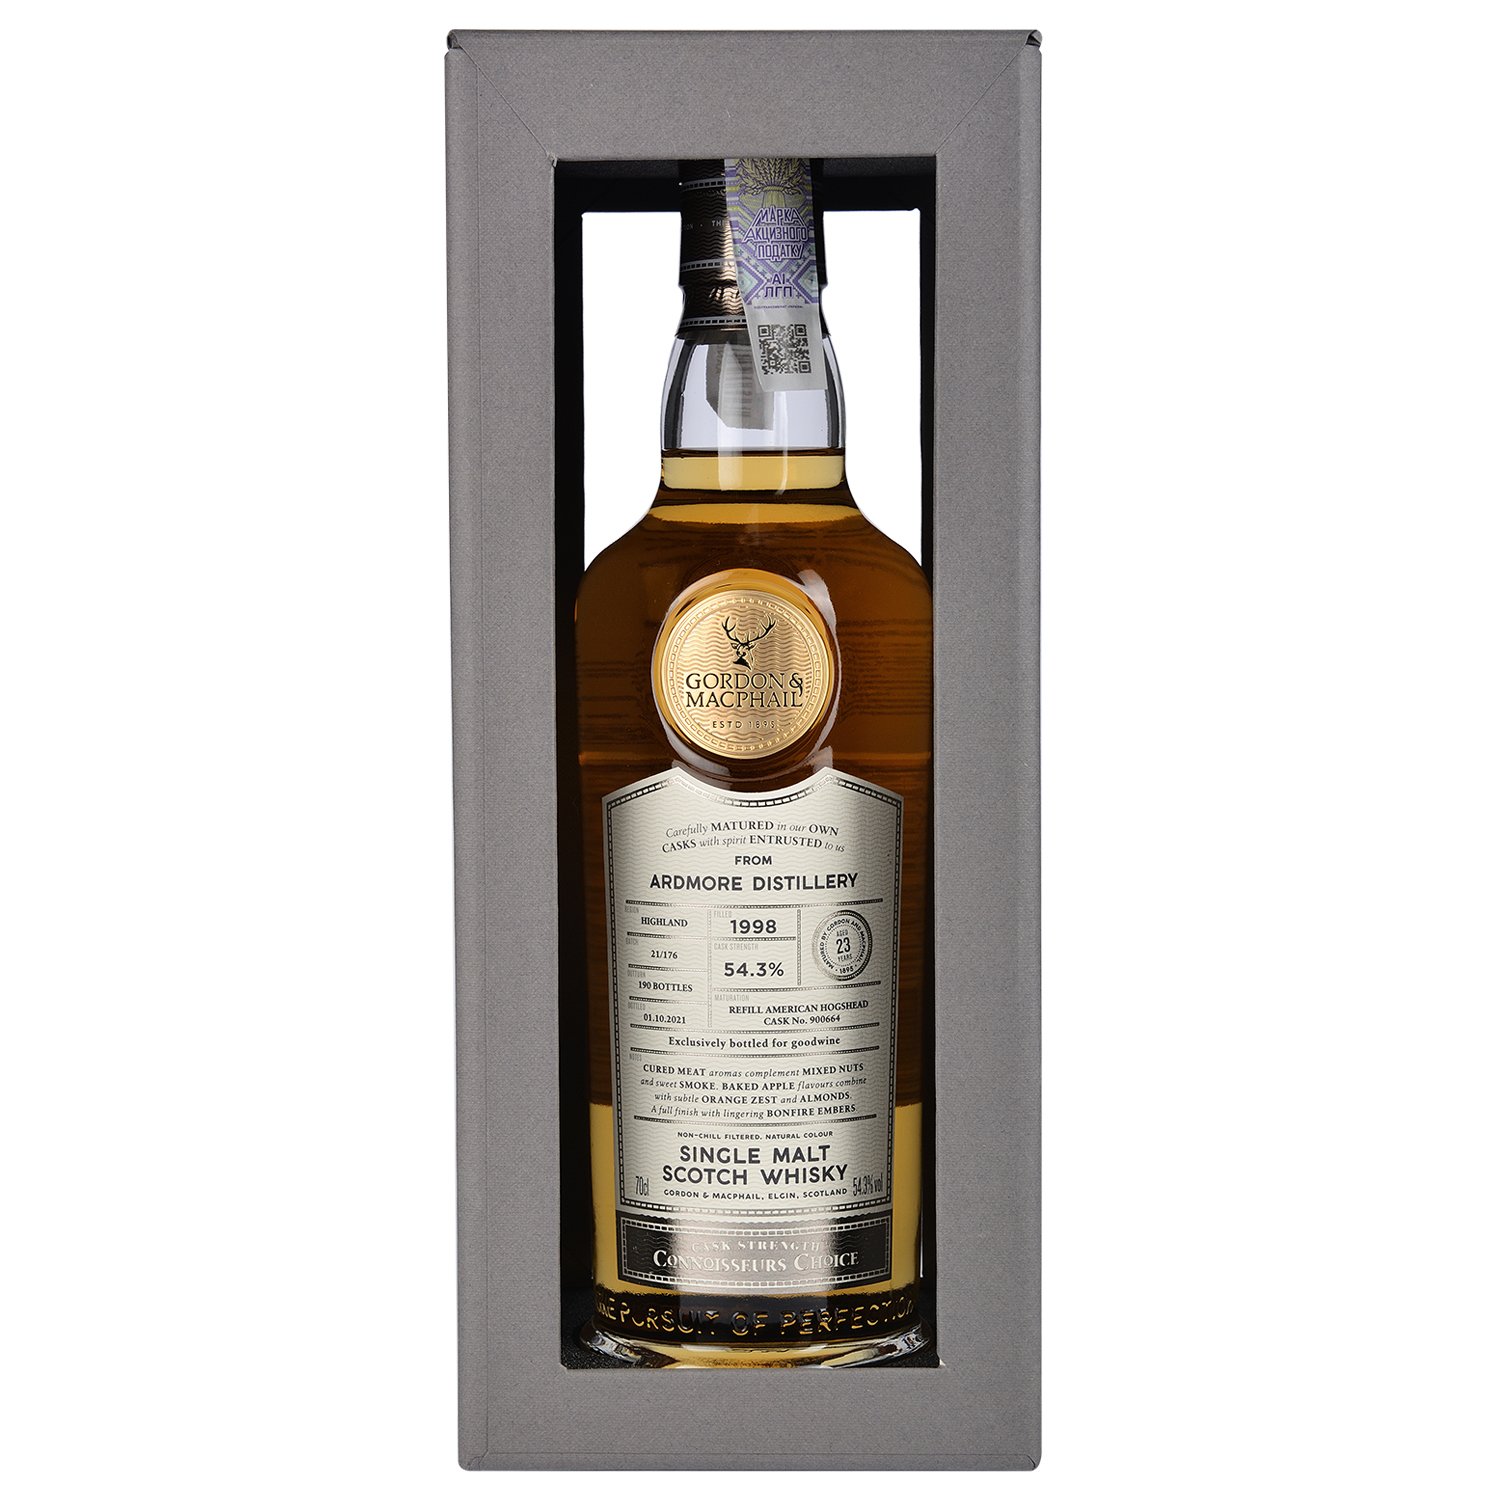 Віскі Gordon&MacPhail Ardmore Connoisseurs Choice 1998 Batch 21/176 Single Malt Scotch Whisky, в подарунковій упаковці, 54,3%, 0,7 л - фото 1